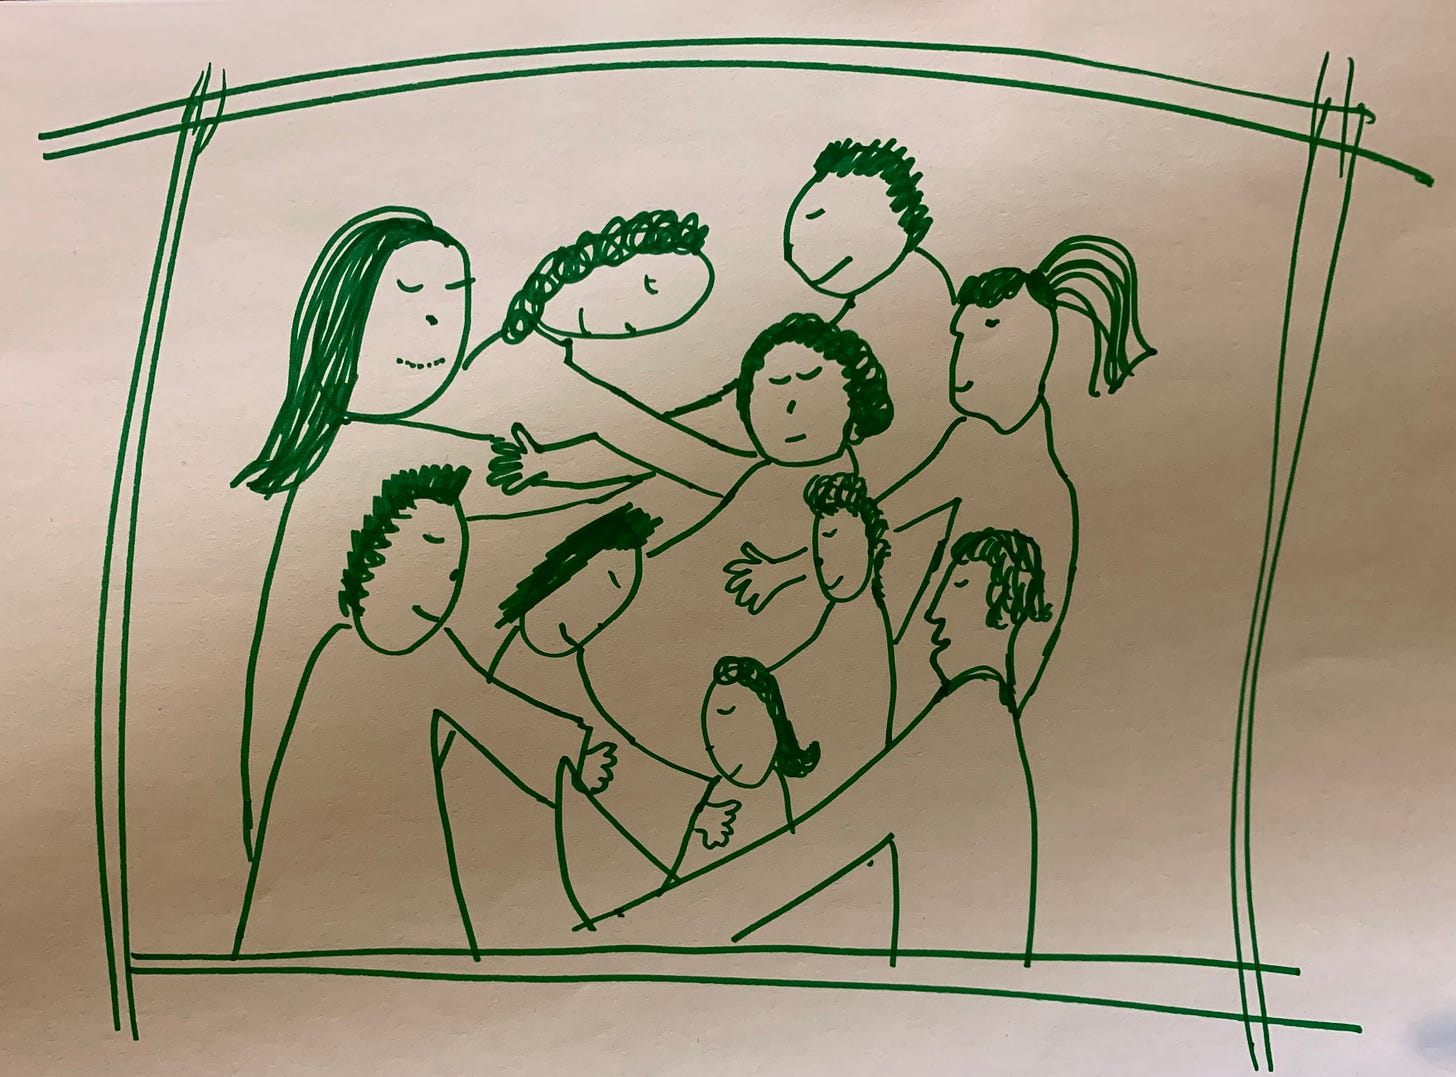 A basic line drawing of 9 people having a group hug